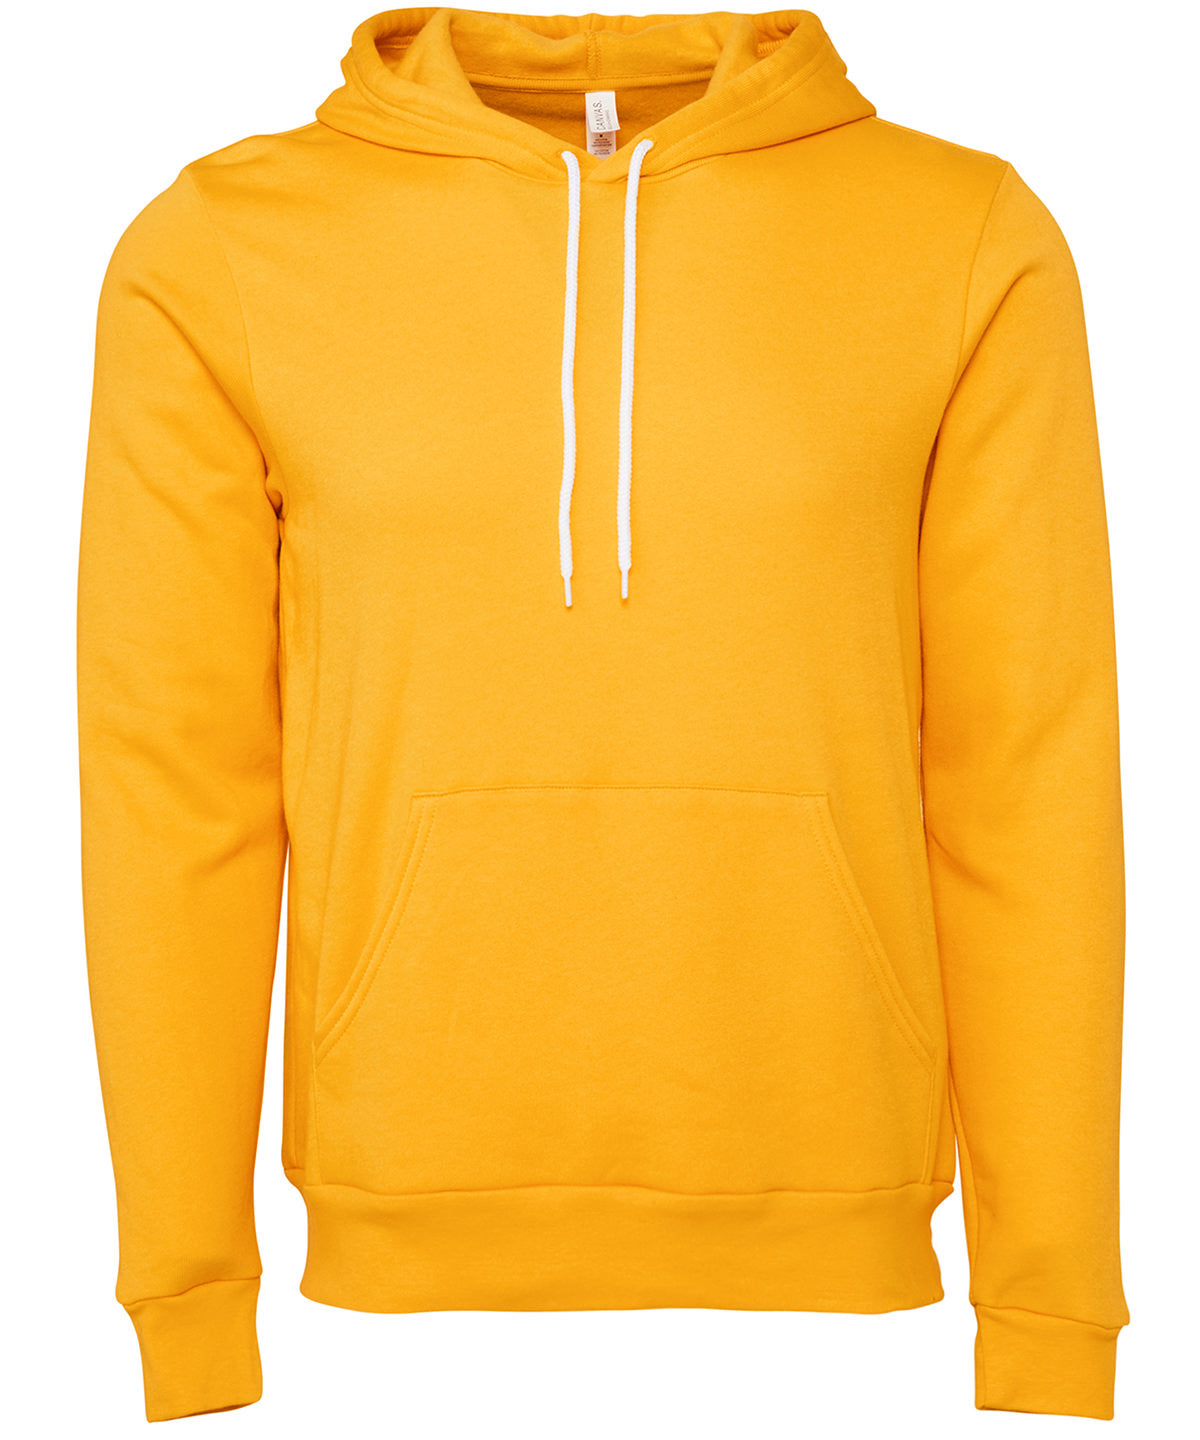 Personalised Hoodies - Tan Bella Canvas Unisex polycotton fleece pullover hoodie